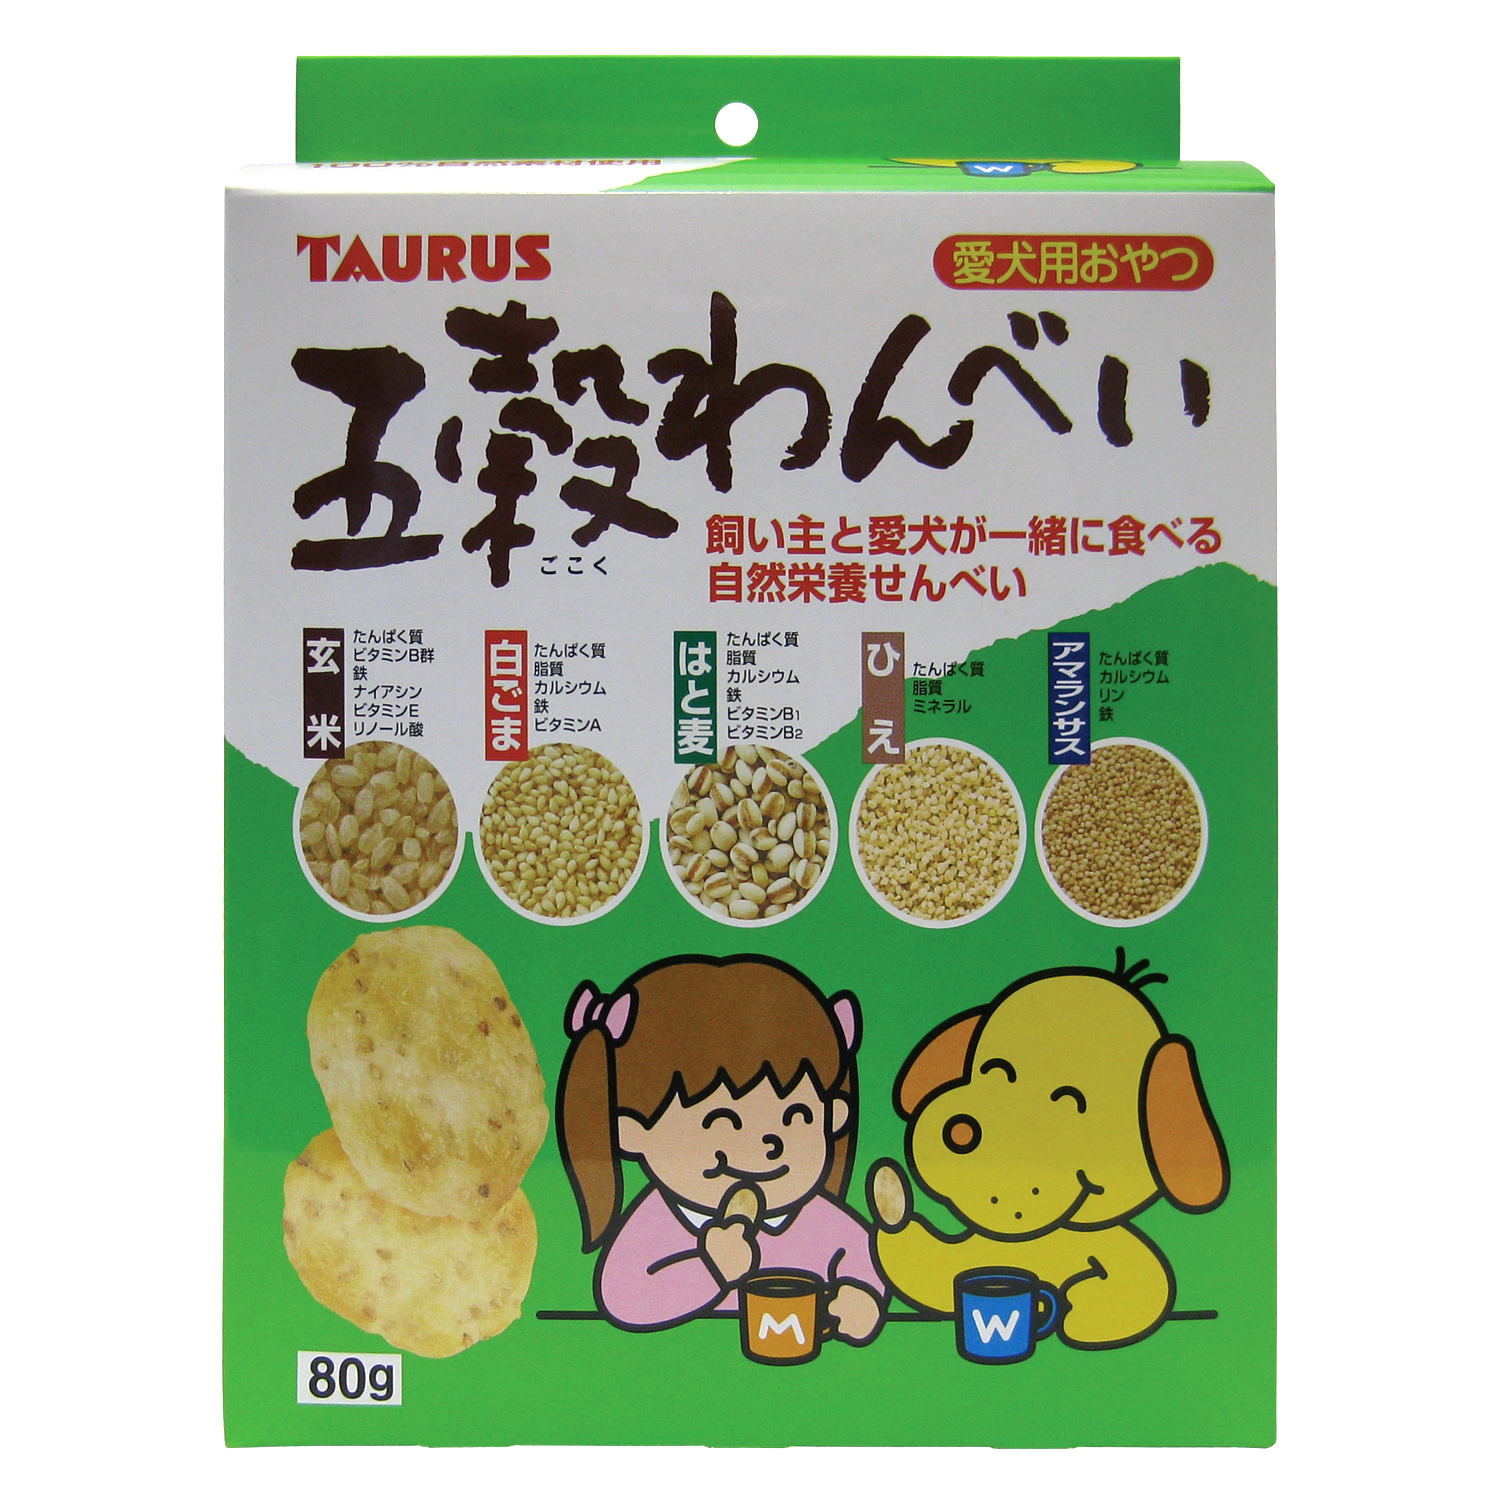 TAURUS-汪貝五穀狗餅乾
TAURUS-wang-bei grain dog tret